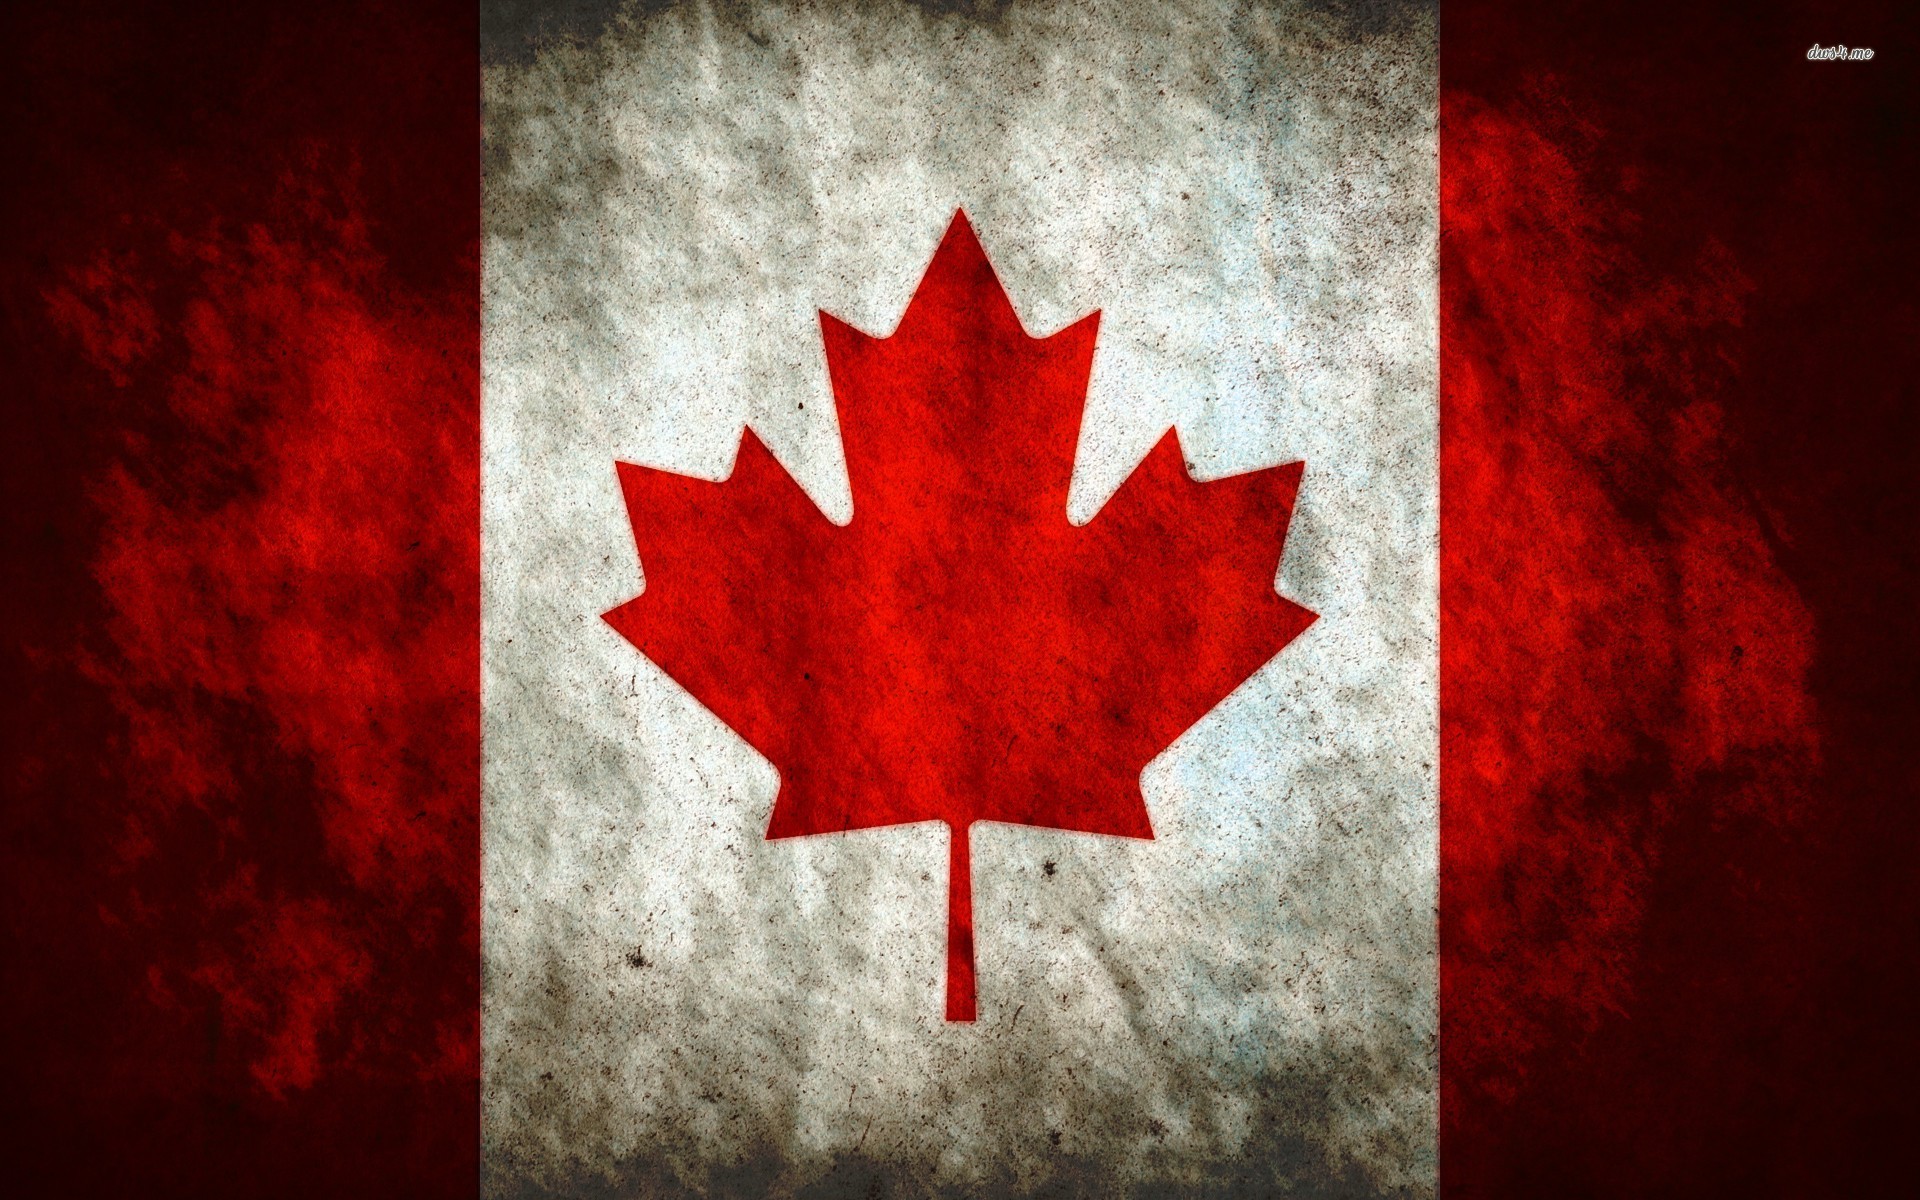 Grunge Canada flag wallpaper - Digital Art wallpapers - #15594